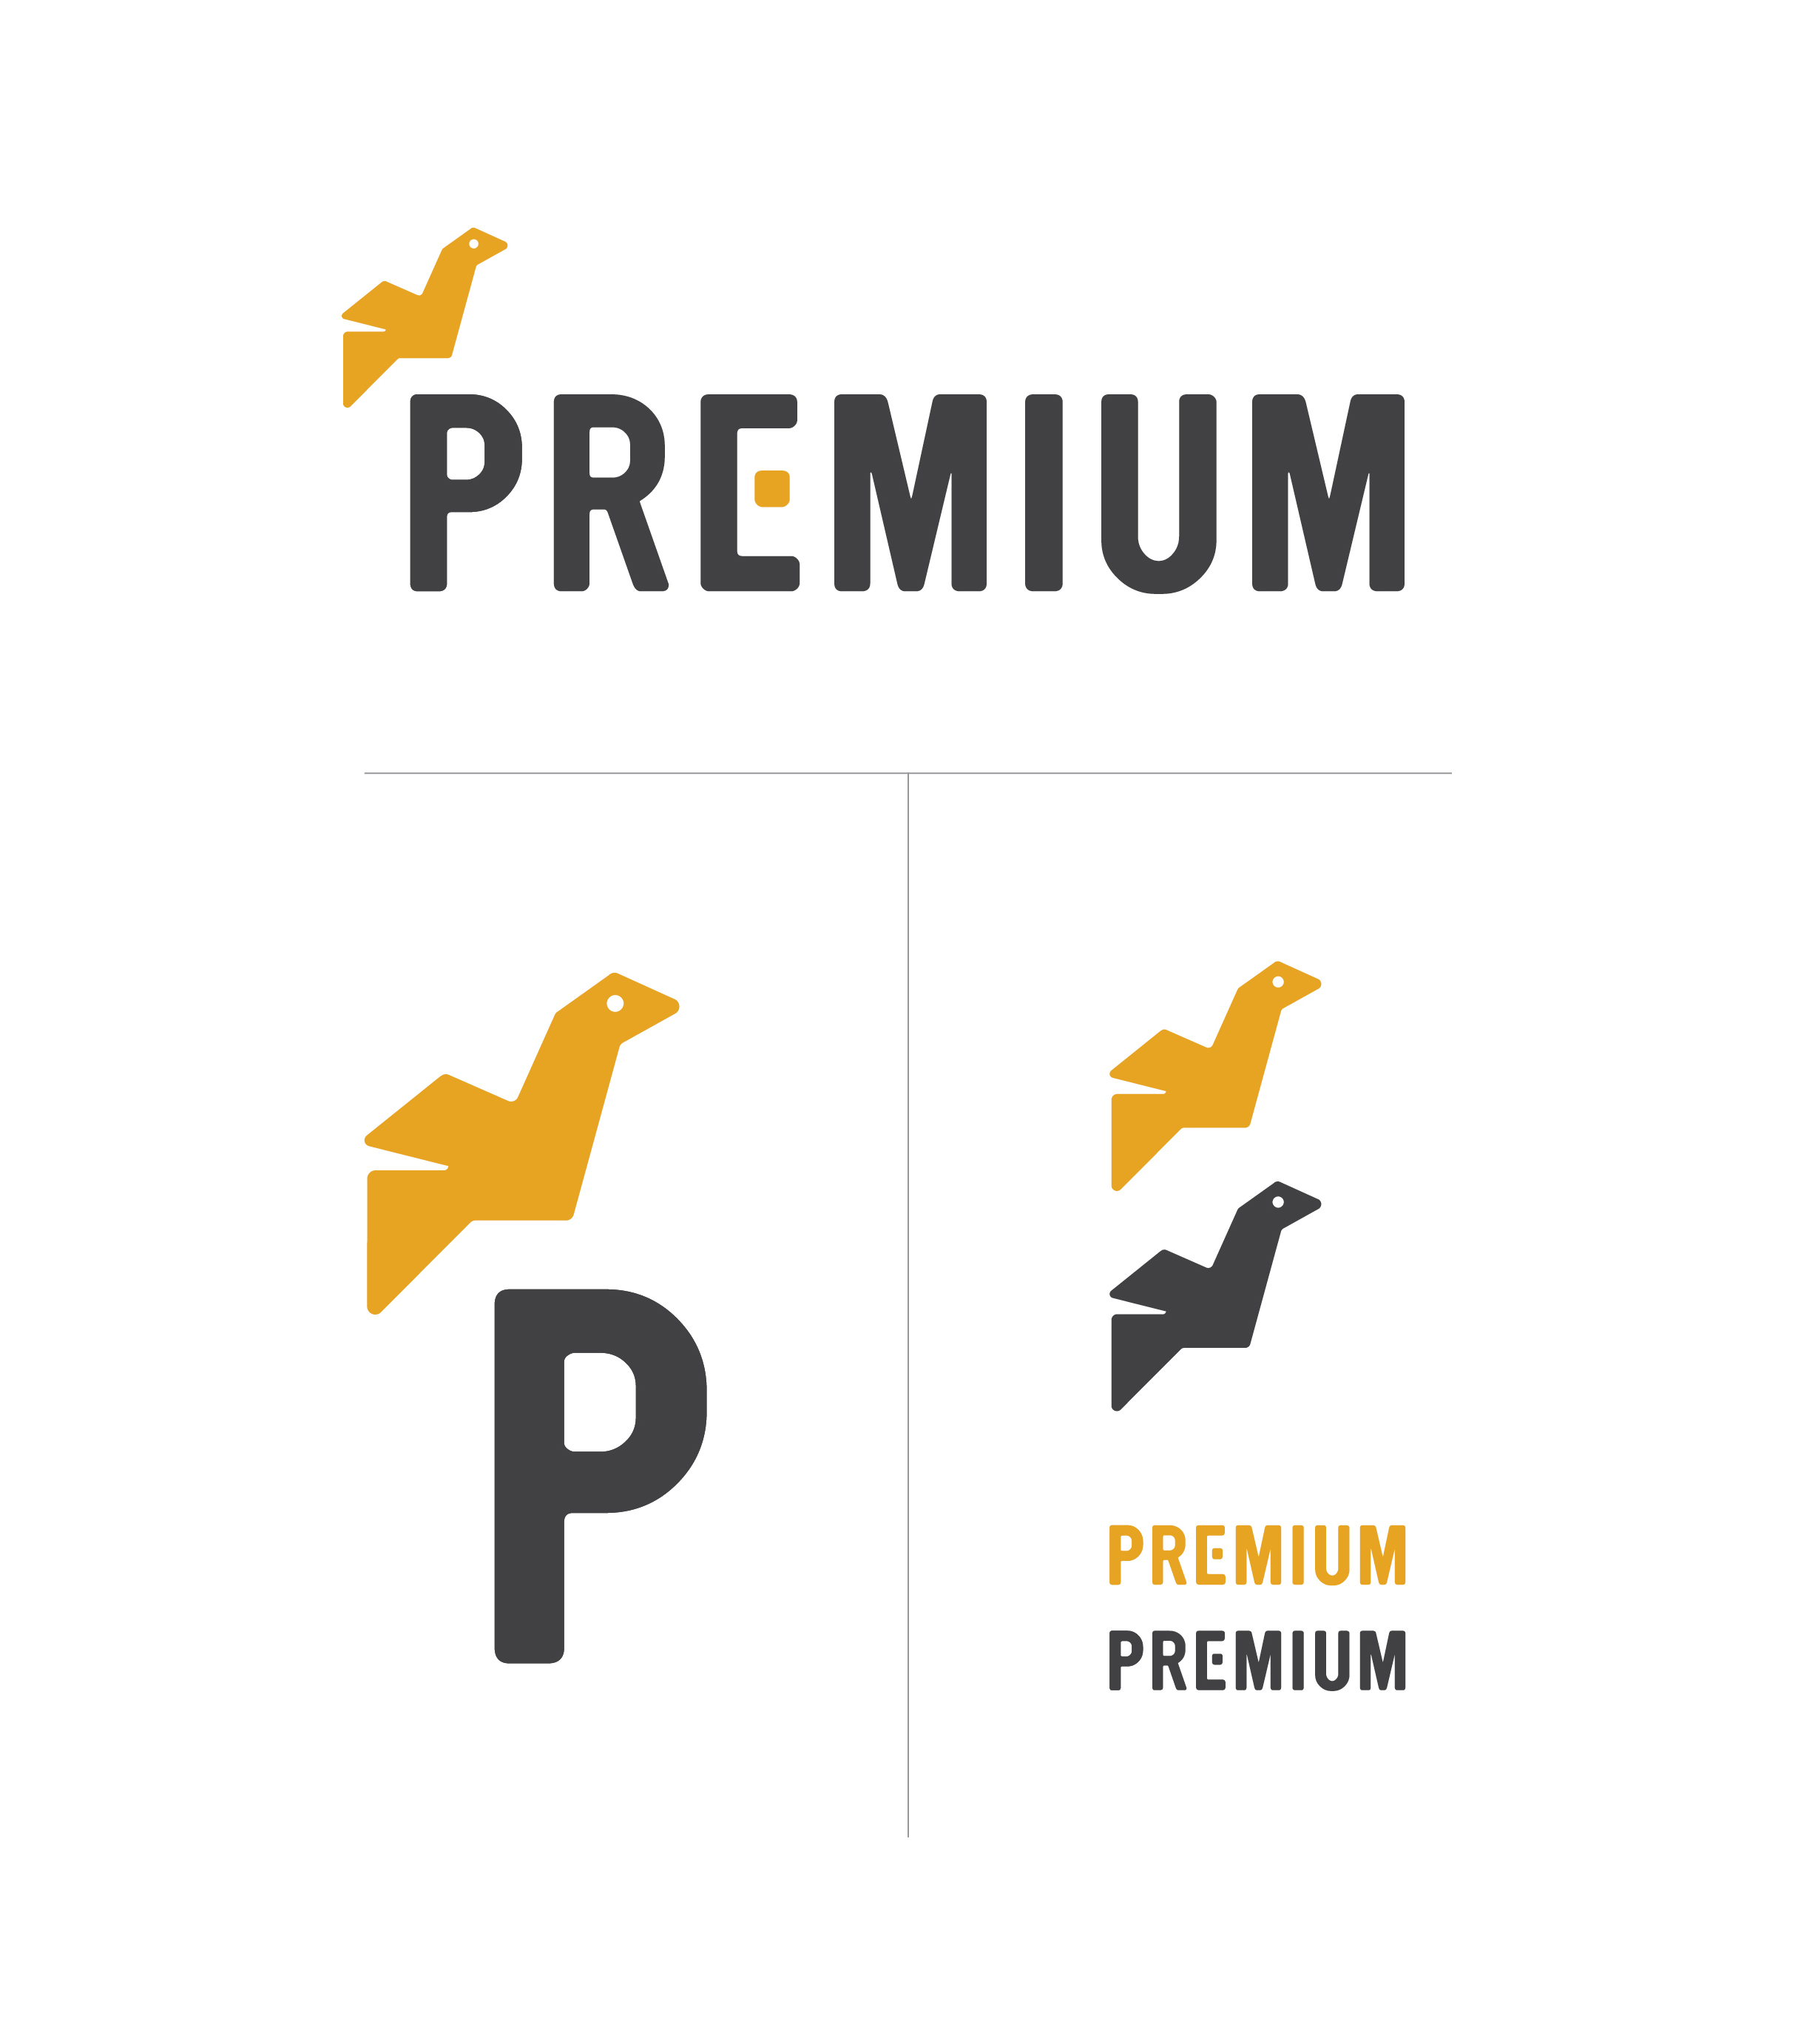 PremiumLogo_US